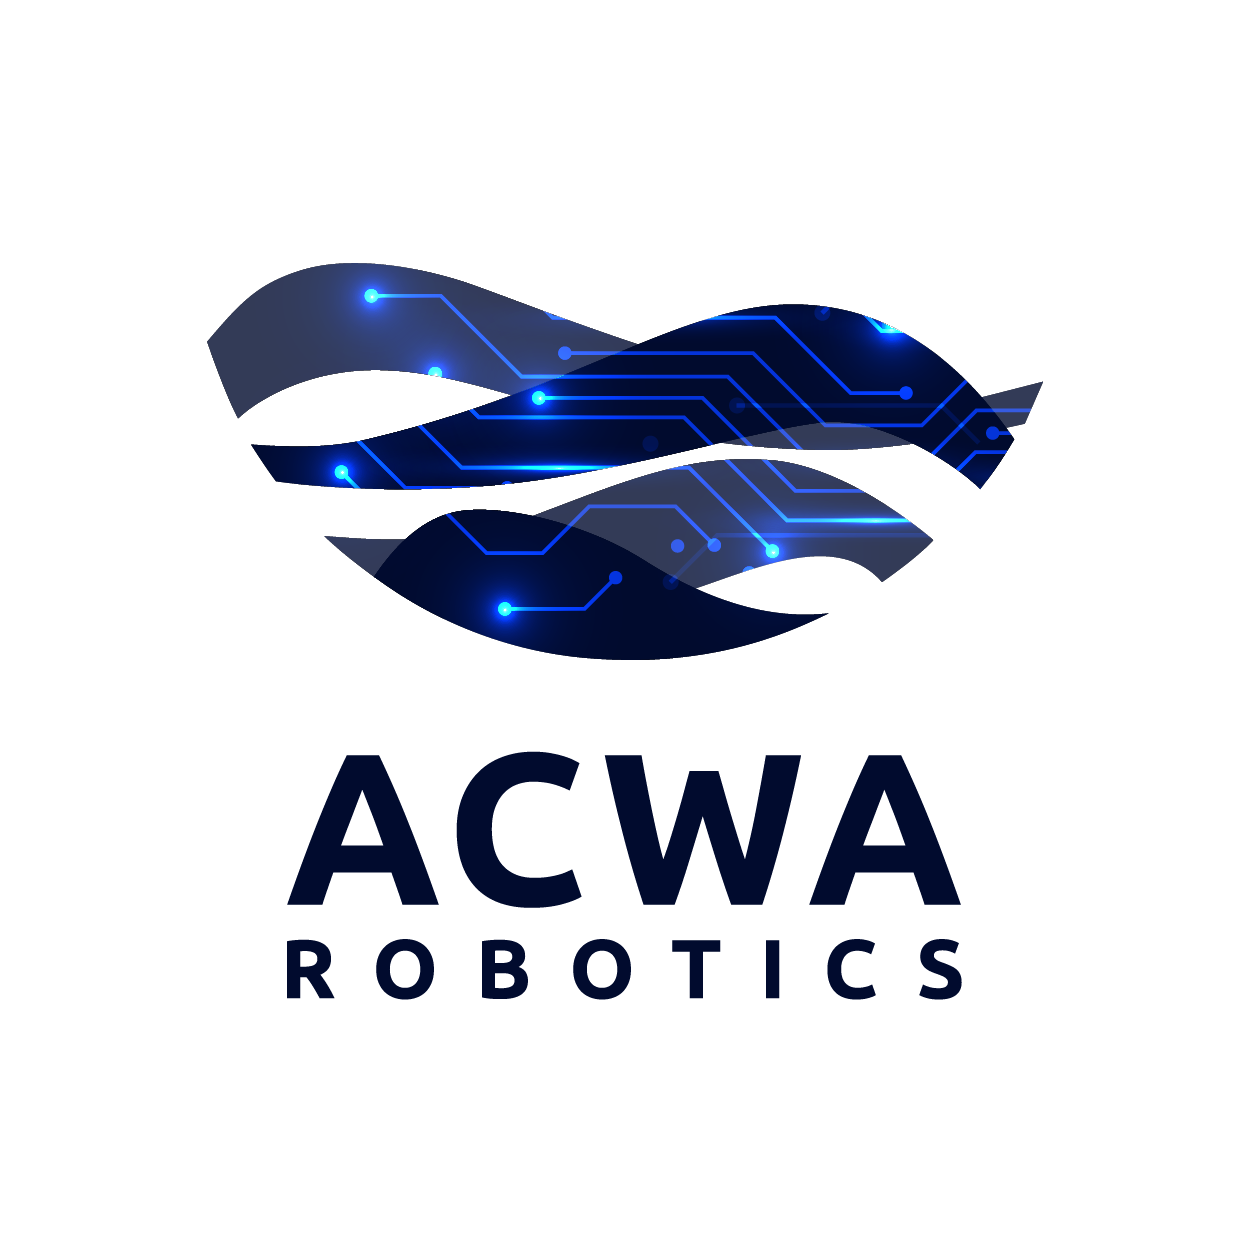 Acwa robotics